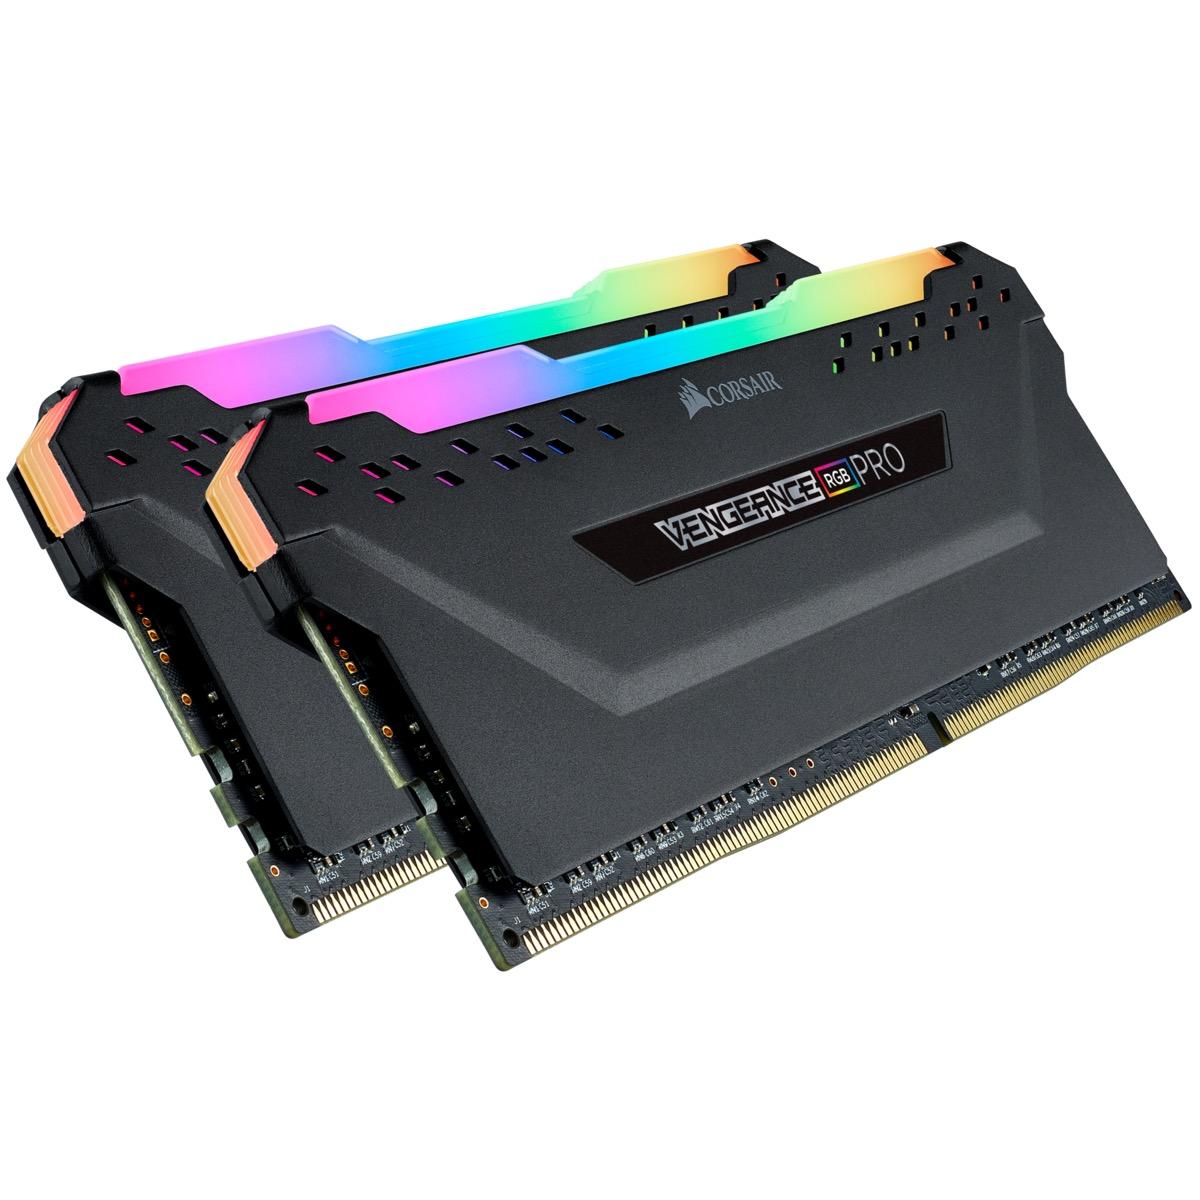 Памет Corsair Vengeance PRO RGB Black 32GB(2x16GB) DDR4 PC4-25600 3200MHz CL16 CMW32GX4M2E3200C16-3